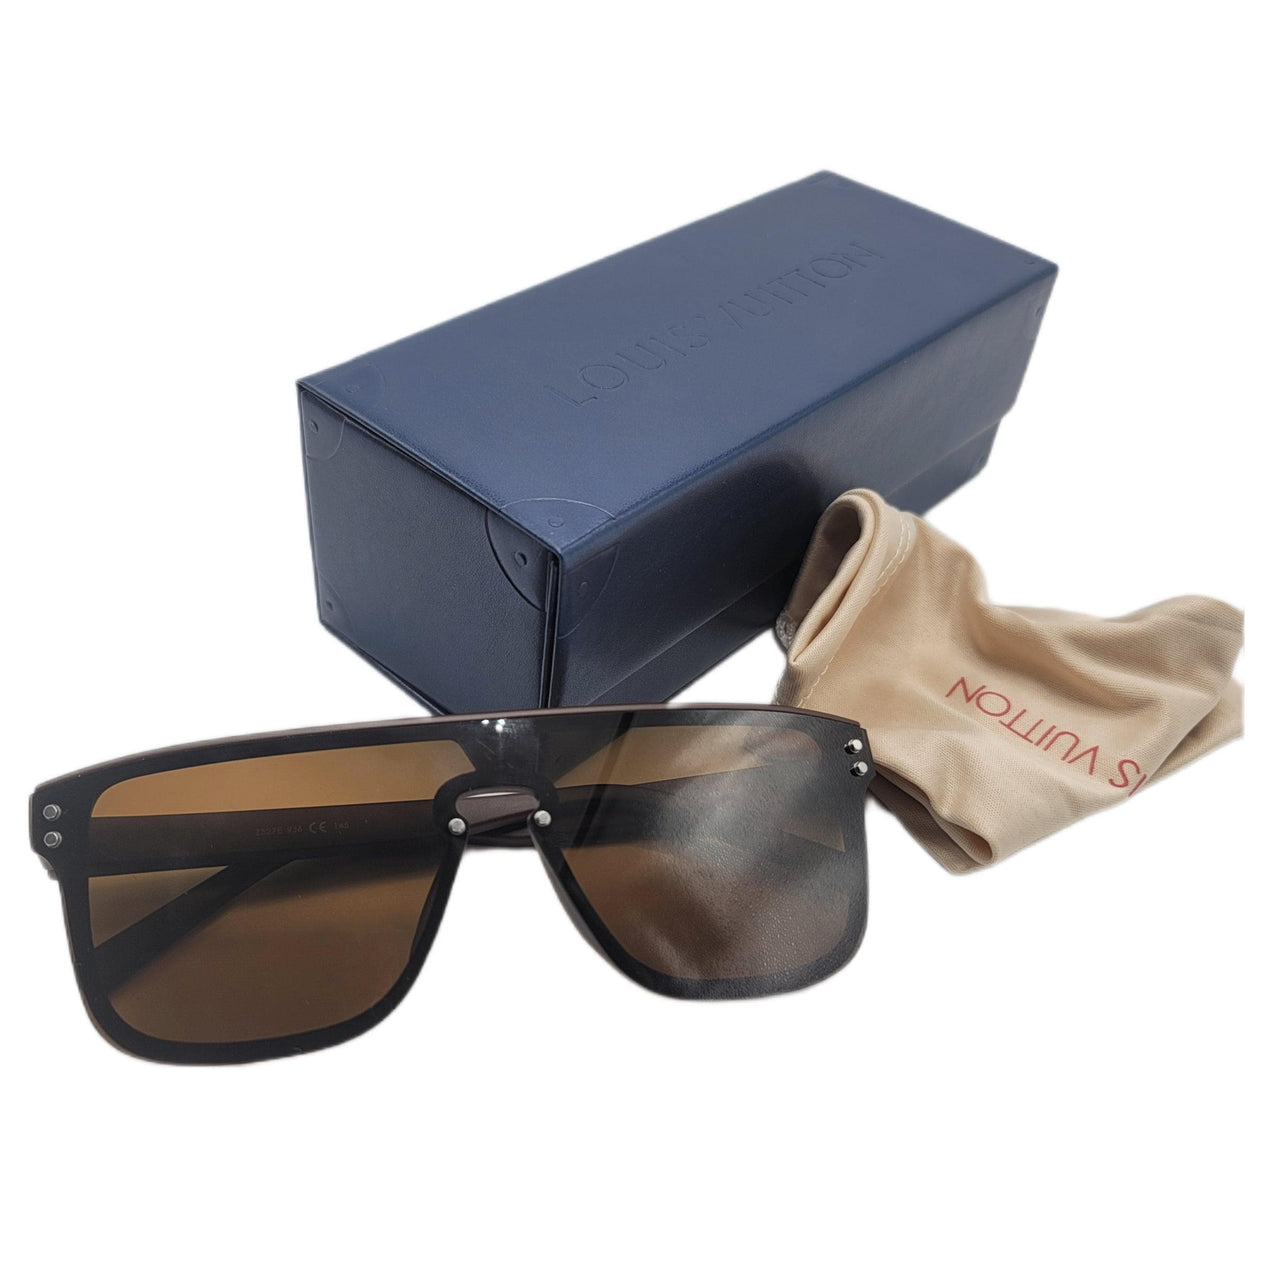 The Bag Couture Sunglasses LV Sunglasses 3